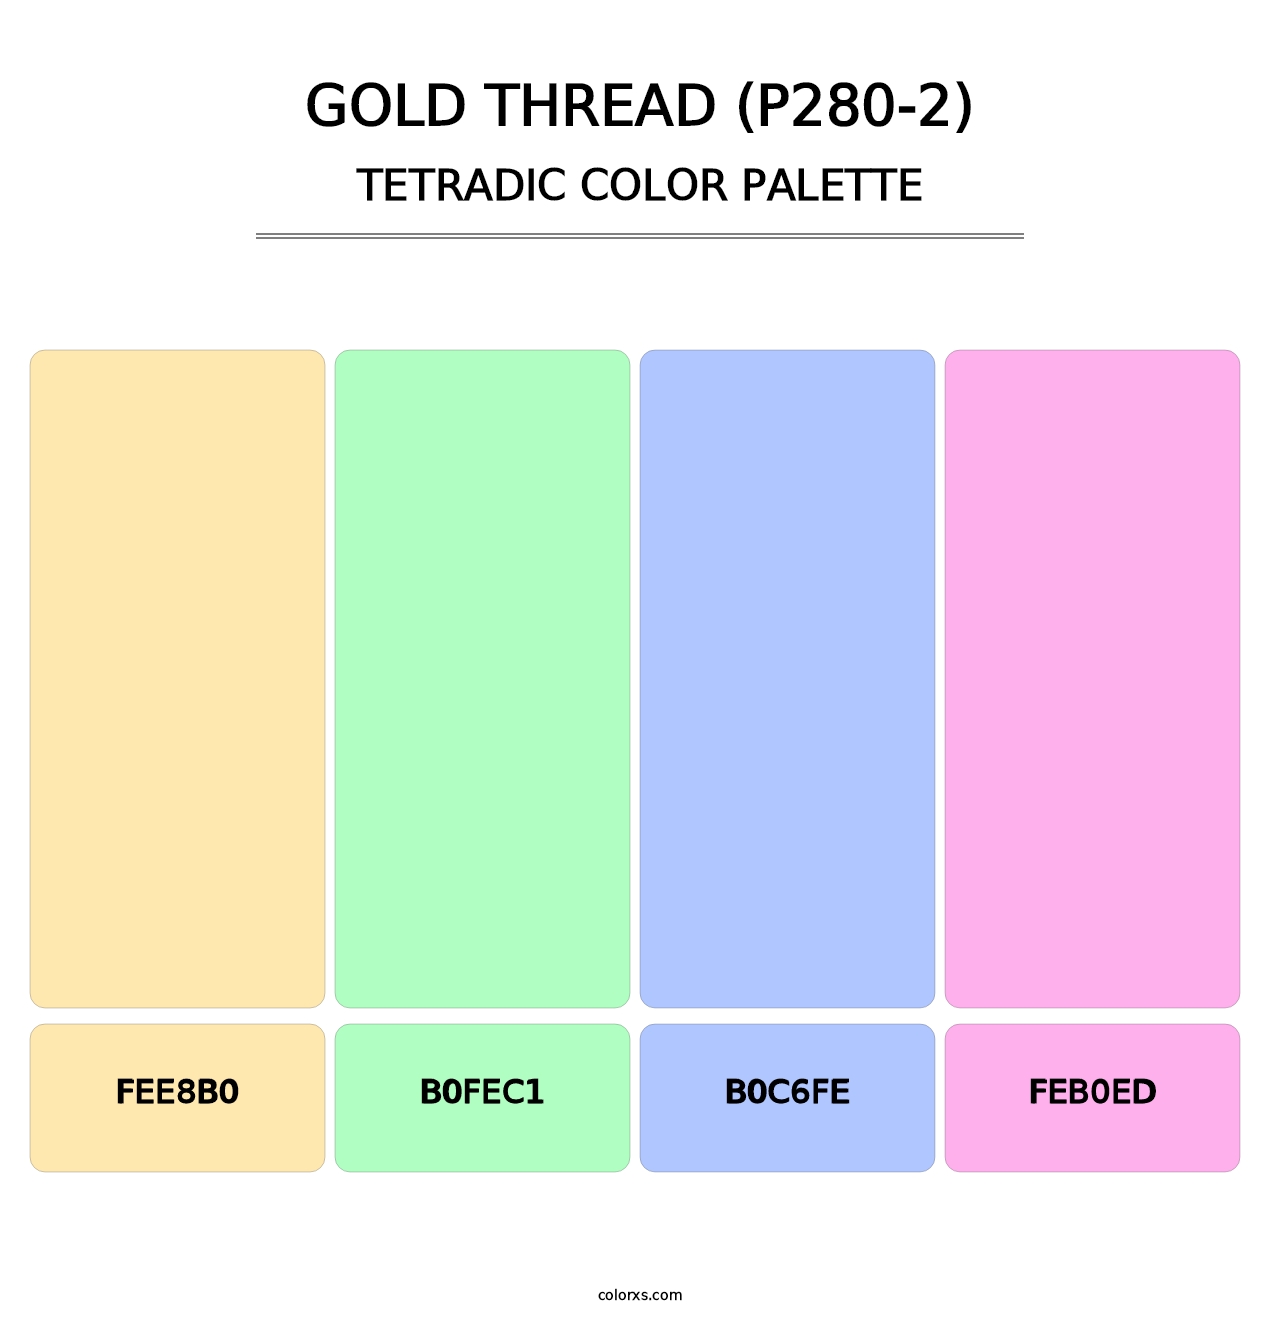 Gold Thread (P280-2) - Tetradic Color Palette